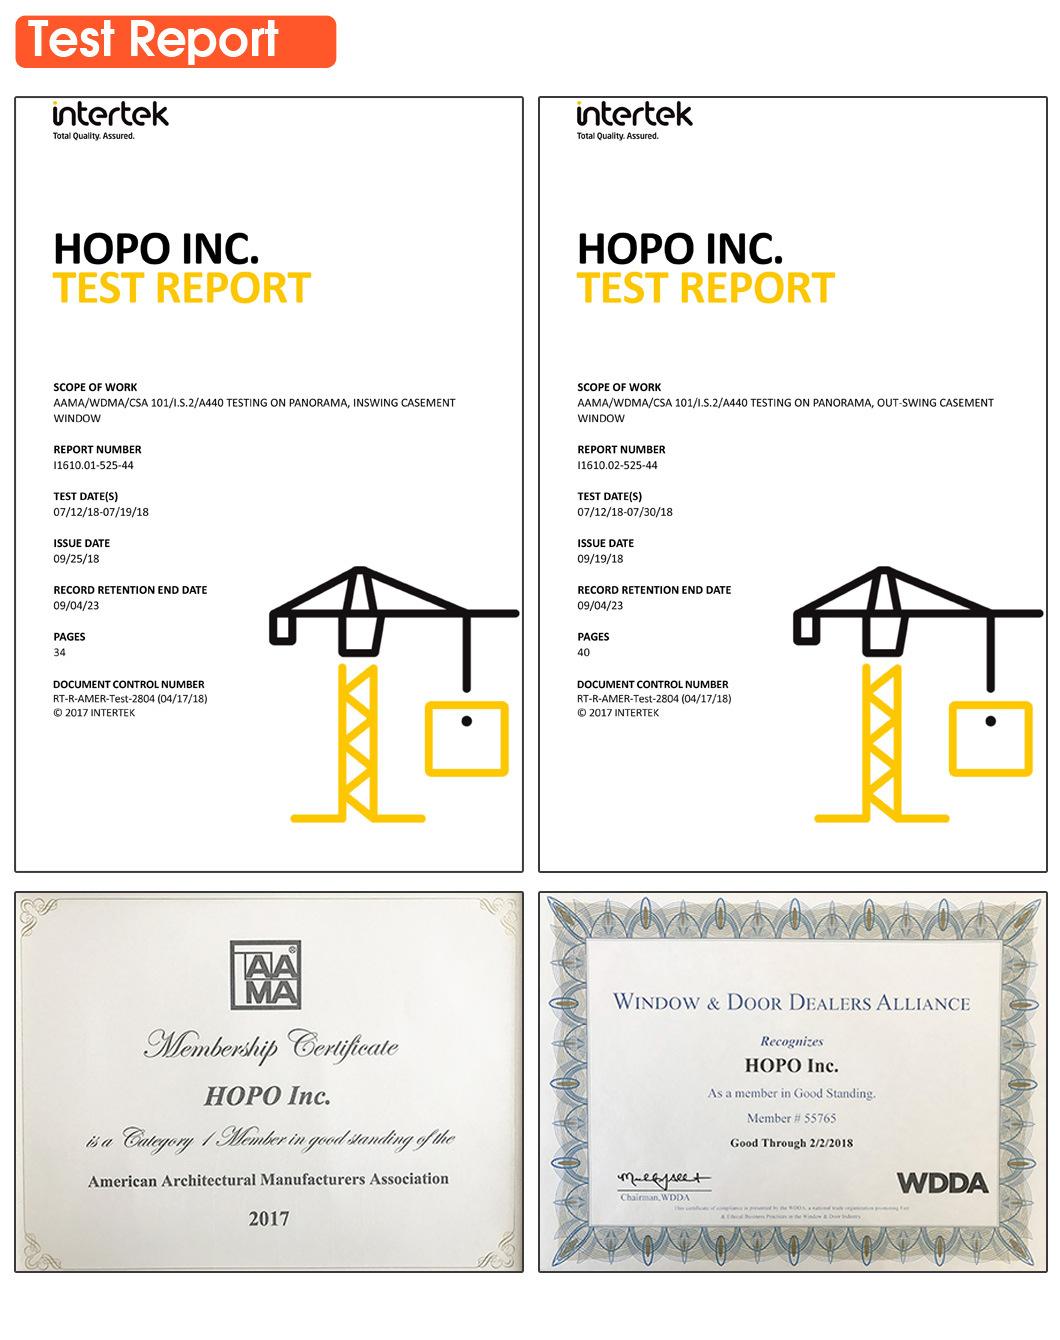 Hopo New Products Windoor Handle for Top Hung Casement Window